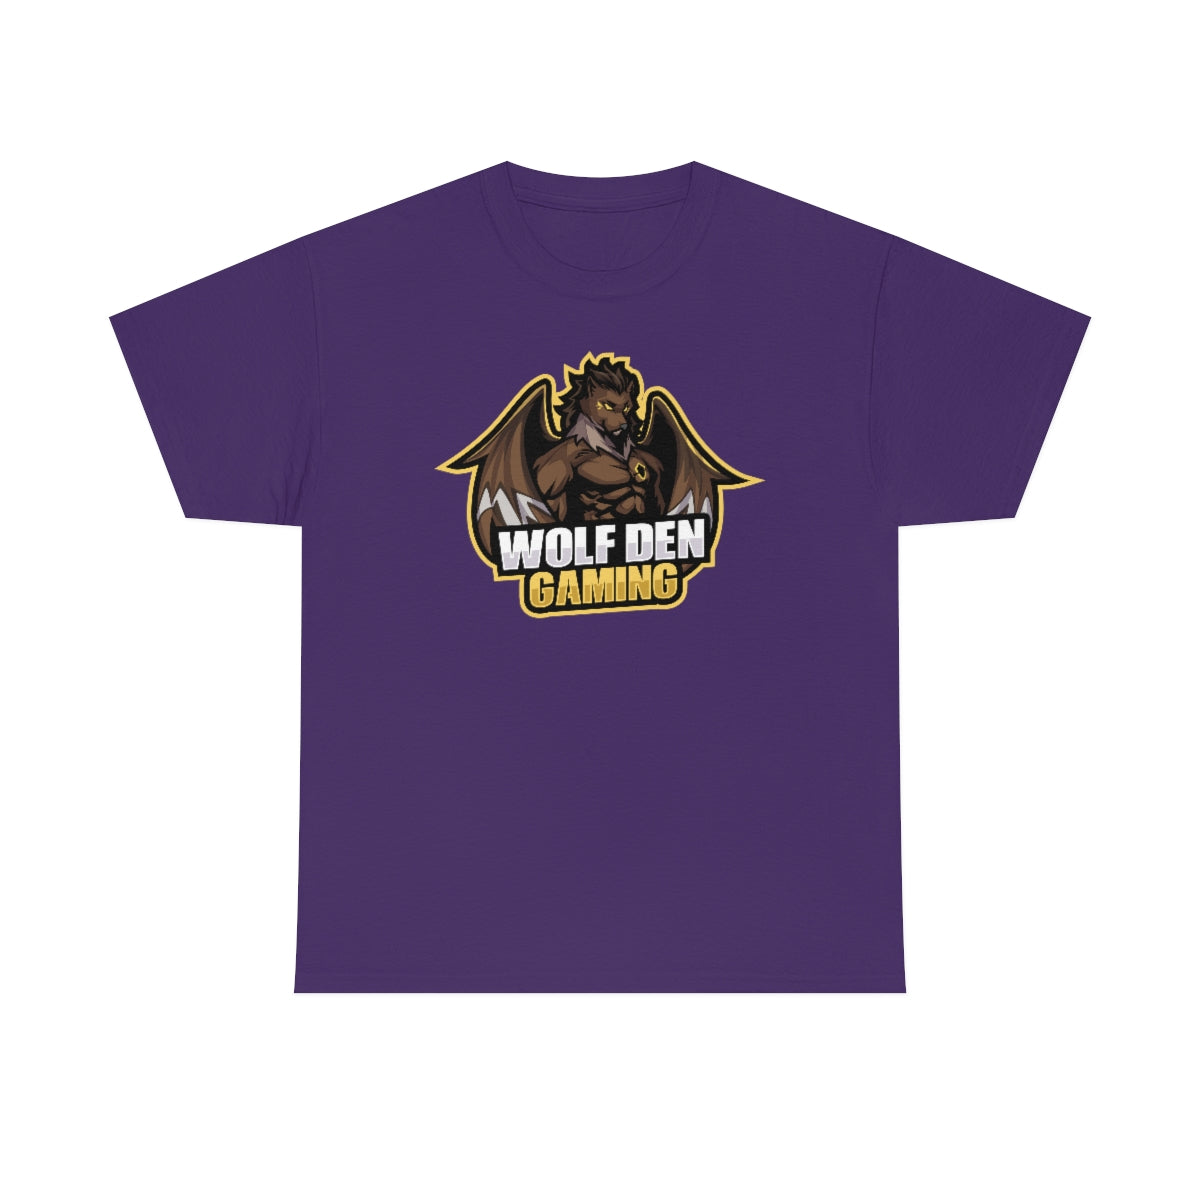 Channel Logo - T-Shirt T-Shirt AFLT-Caelum Bellator Purple S 